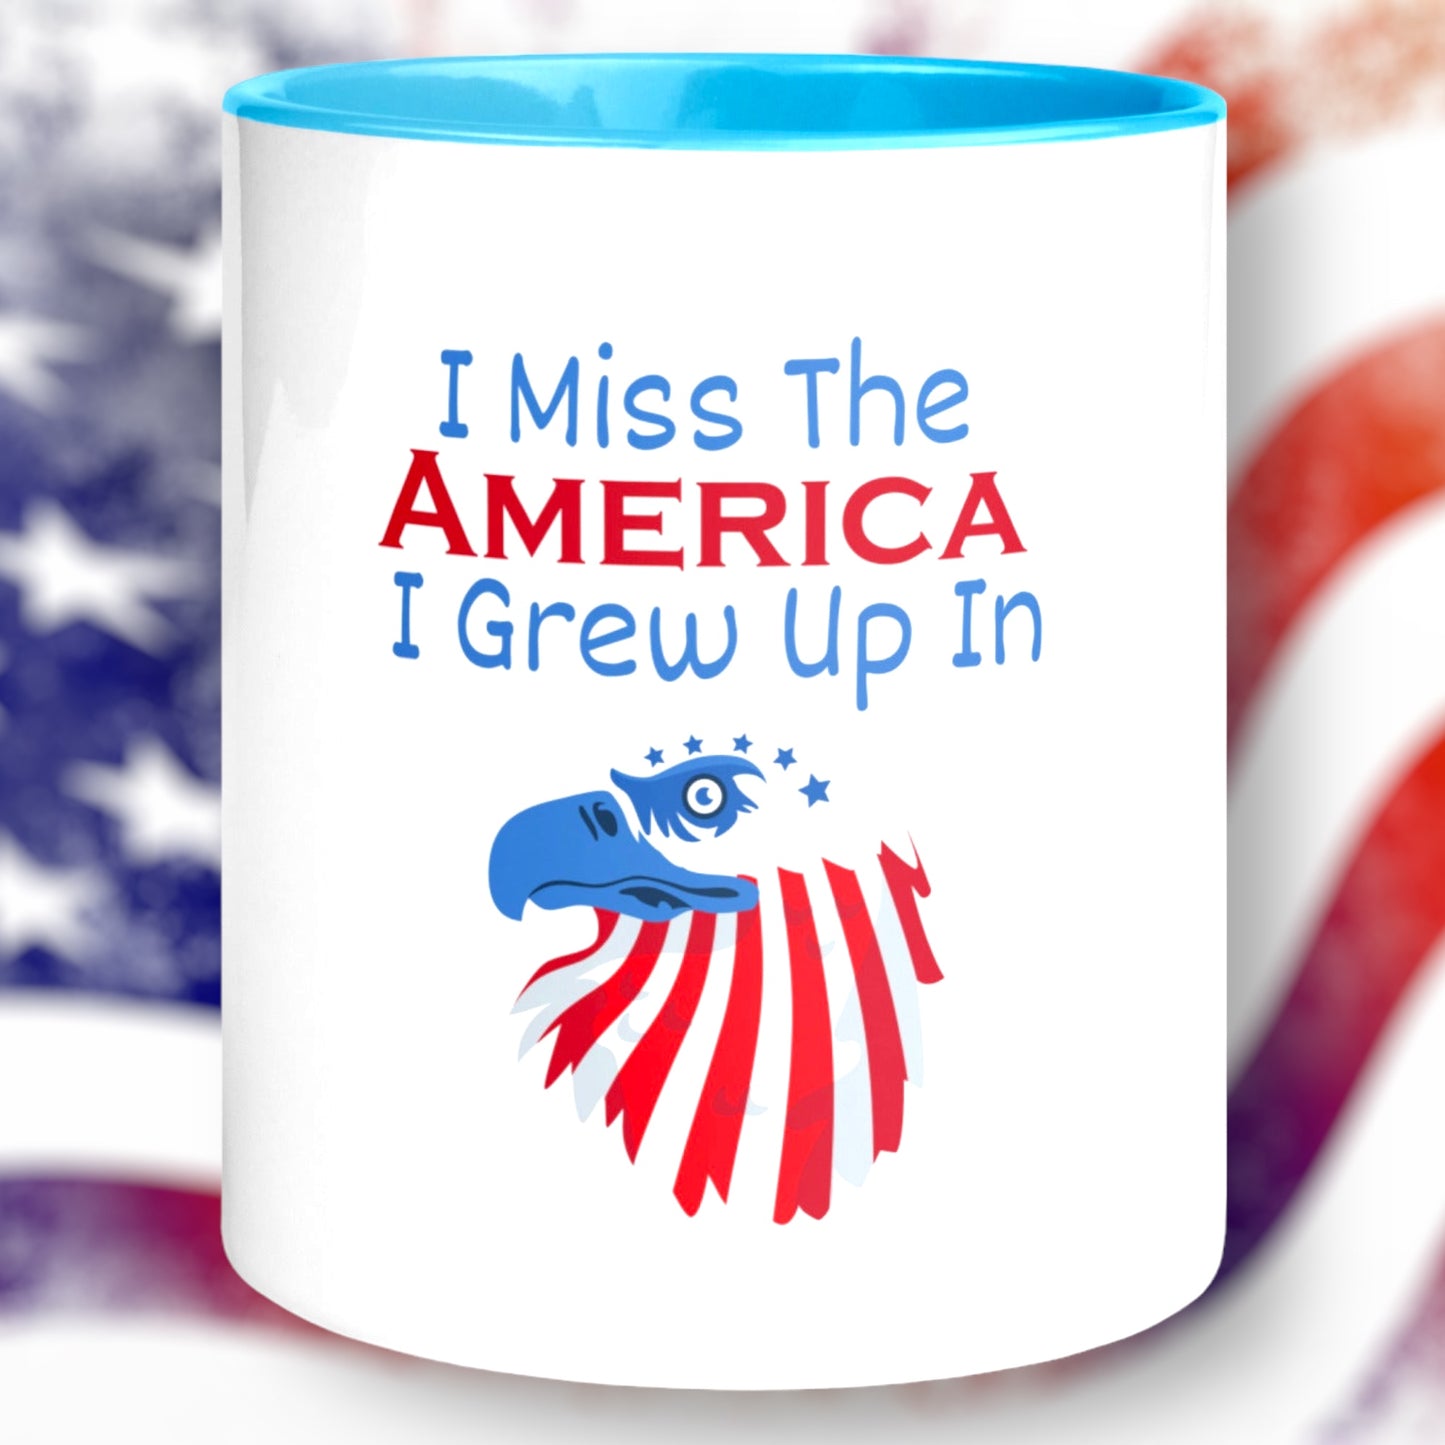 Nostalgic 'I Miss The America I Grew Up In' ceramic coffee cup